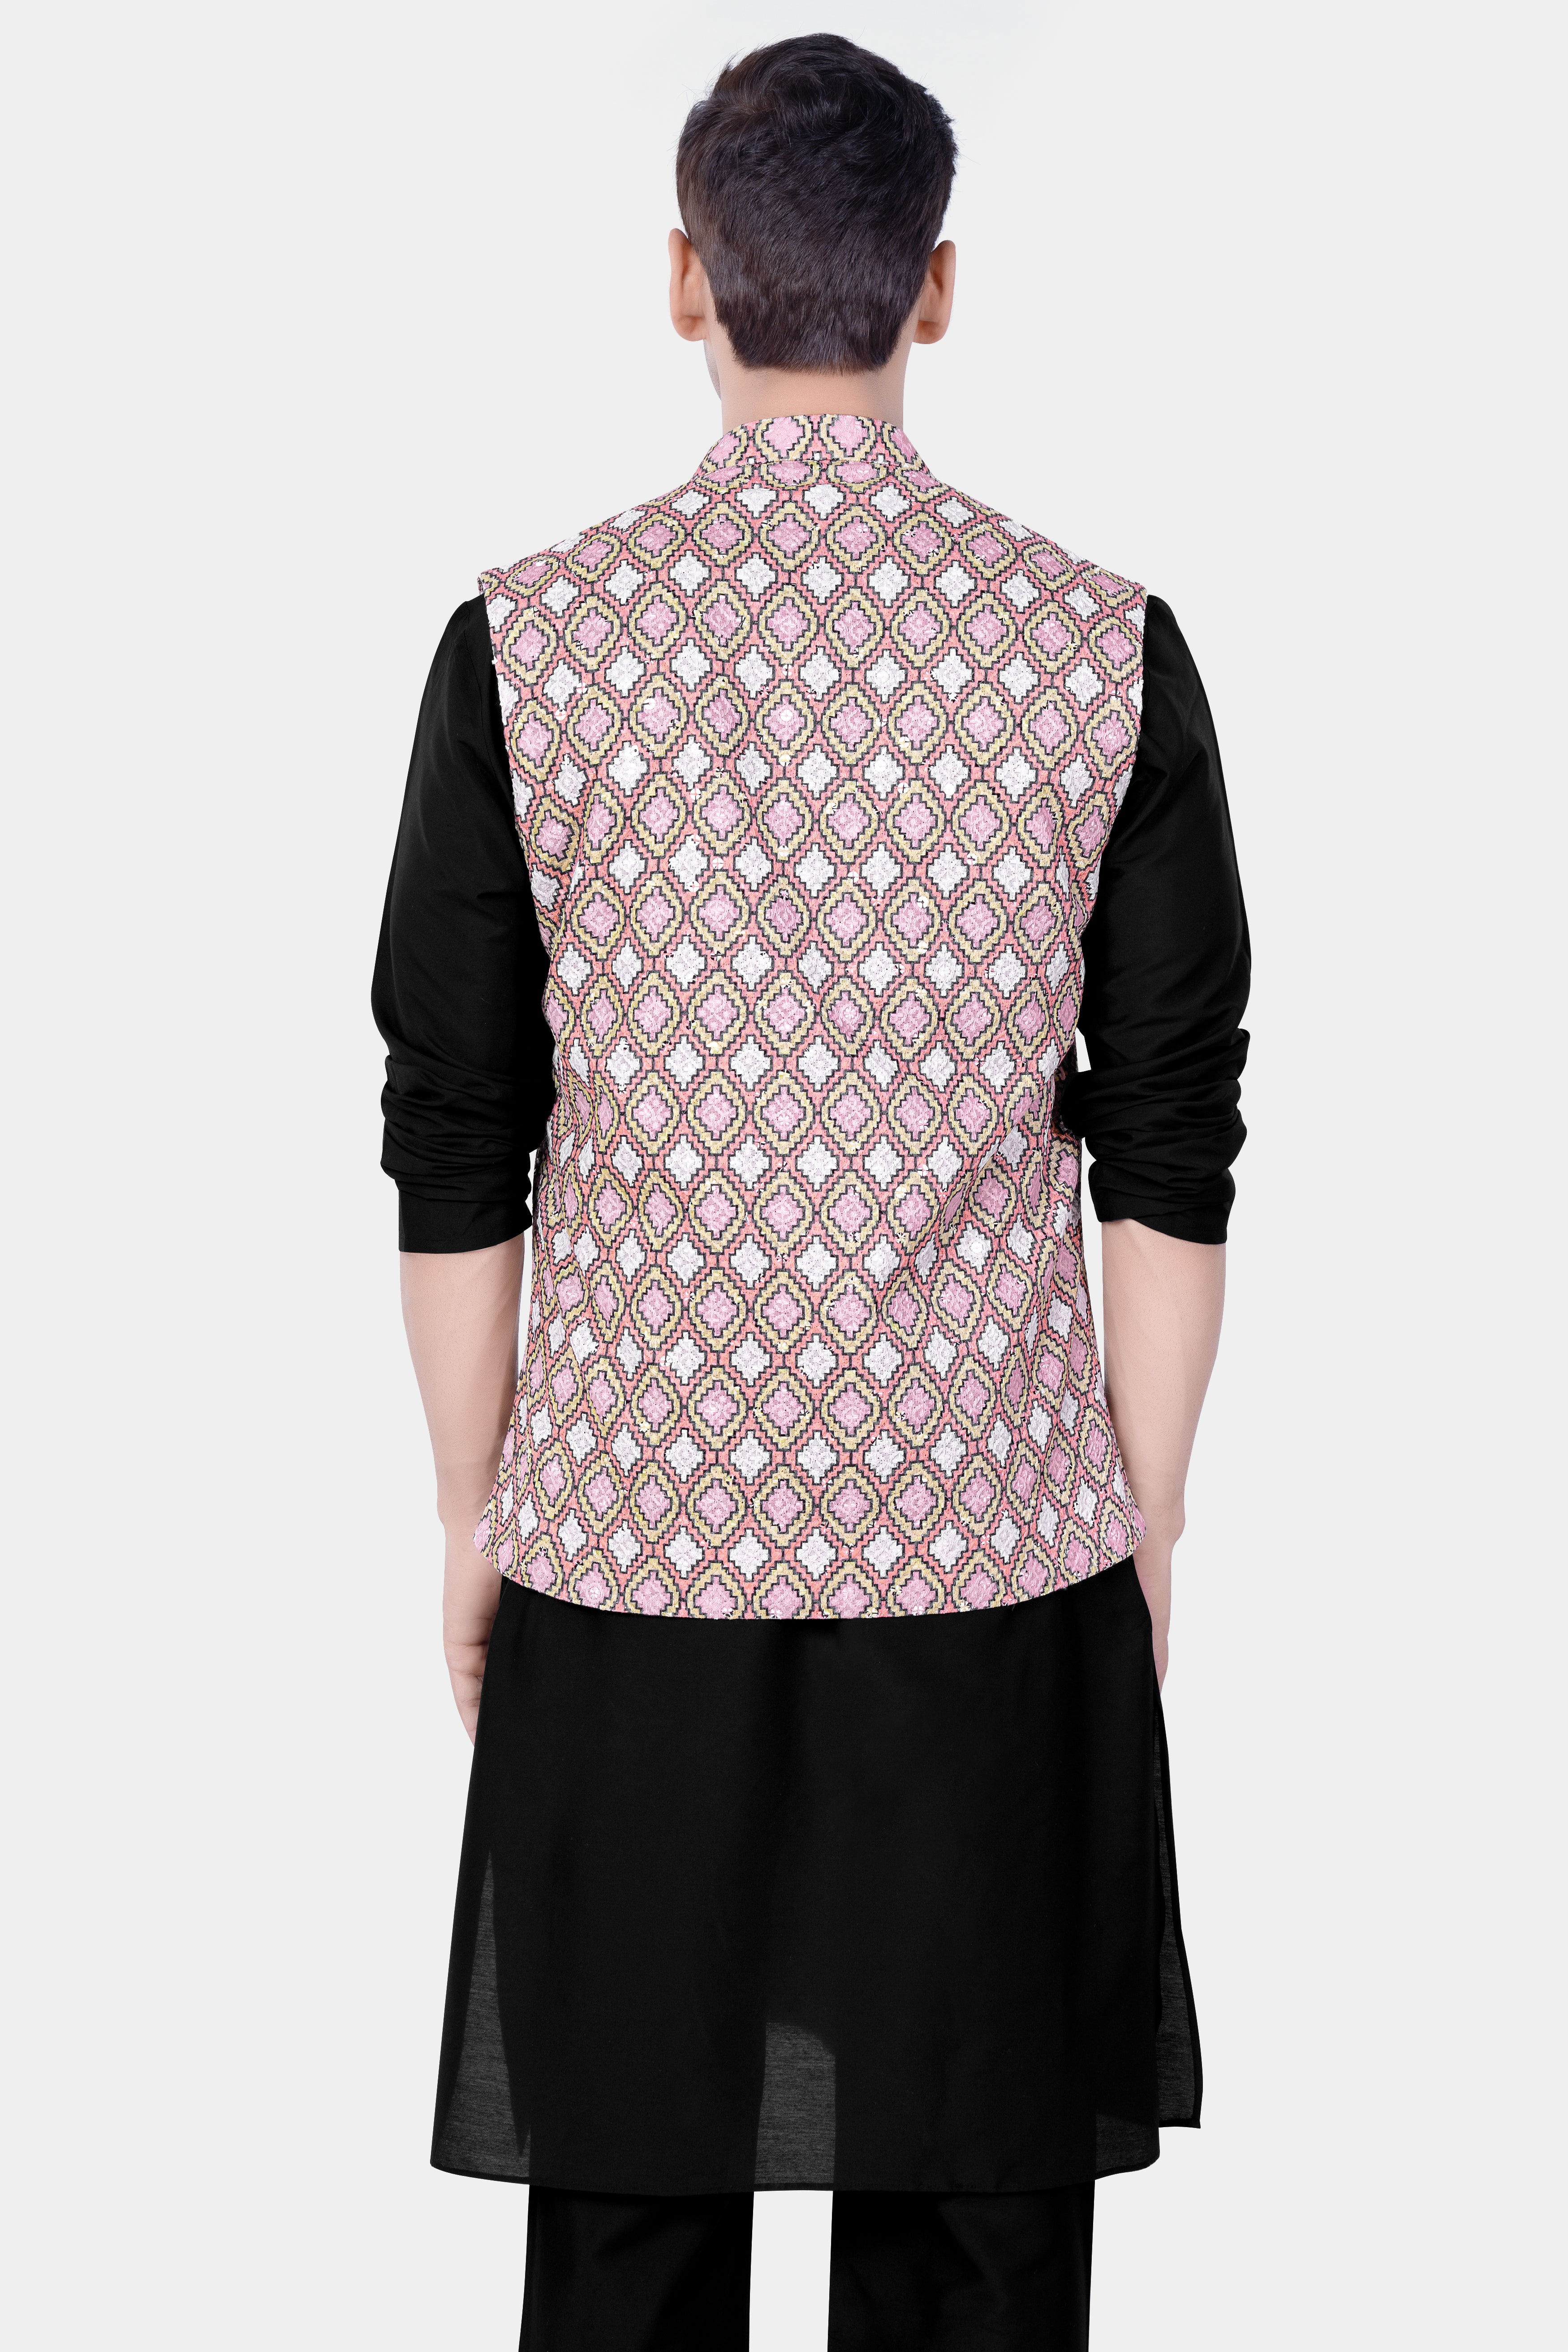 Jade Black Kurta Set With Azalea Pink And Astra Yellow MultiColour Designer Embroidered Nehru Jacket